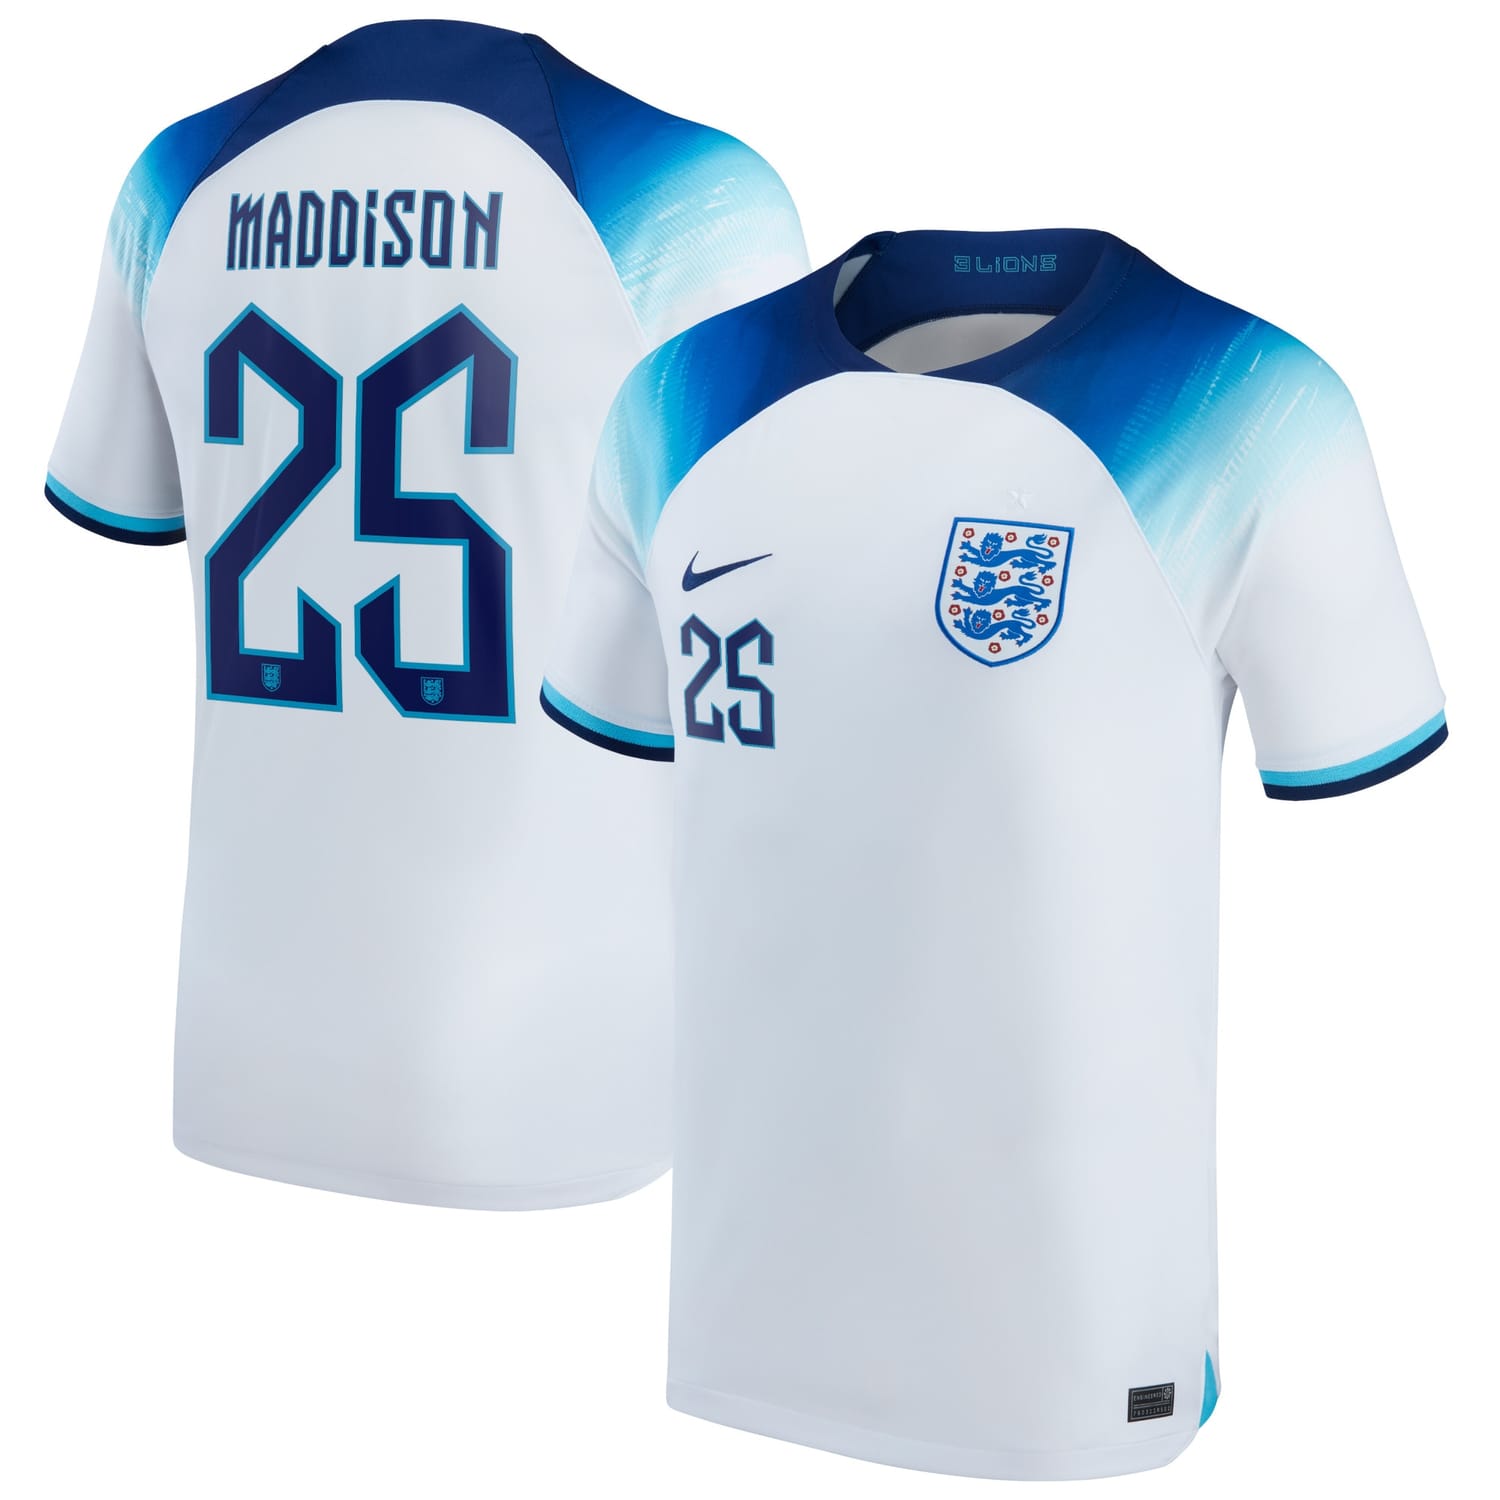 England National Team Home Jersey Shirt 2022 player James Maddison 25 printing for Men